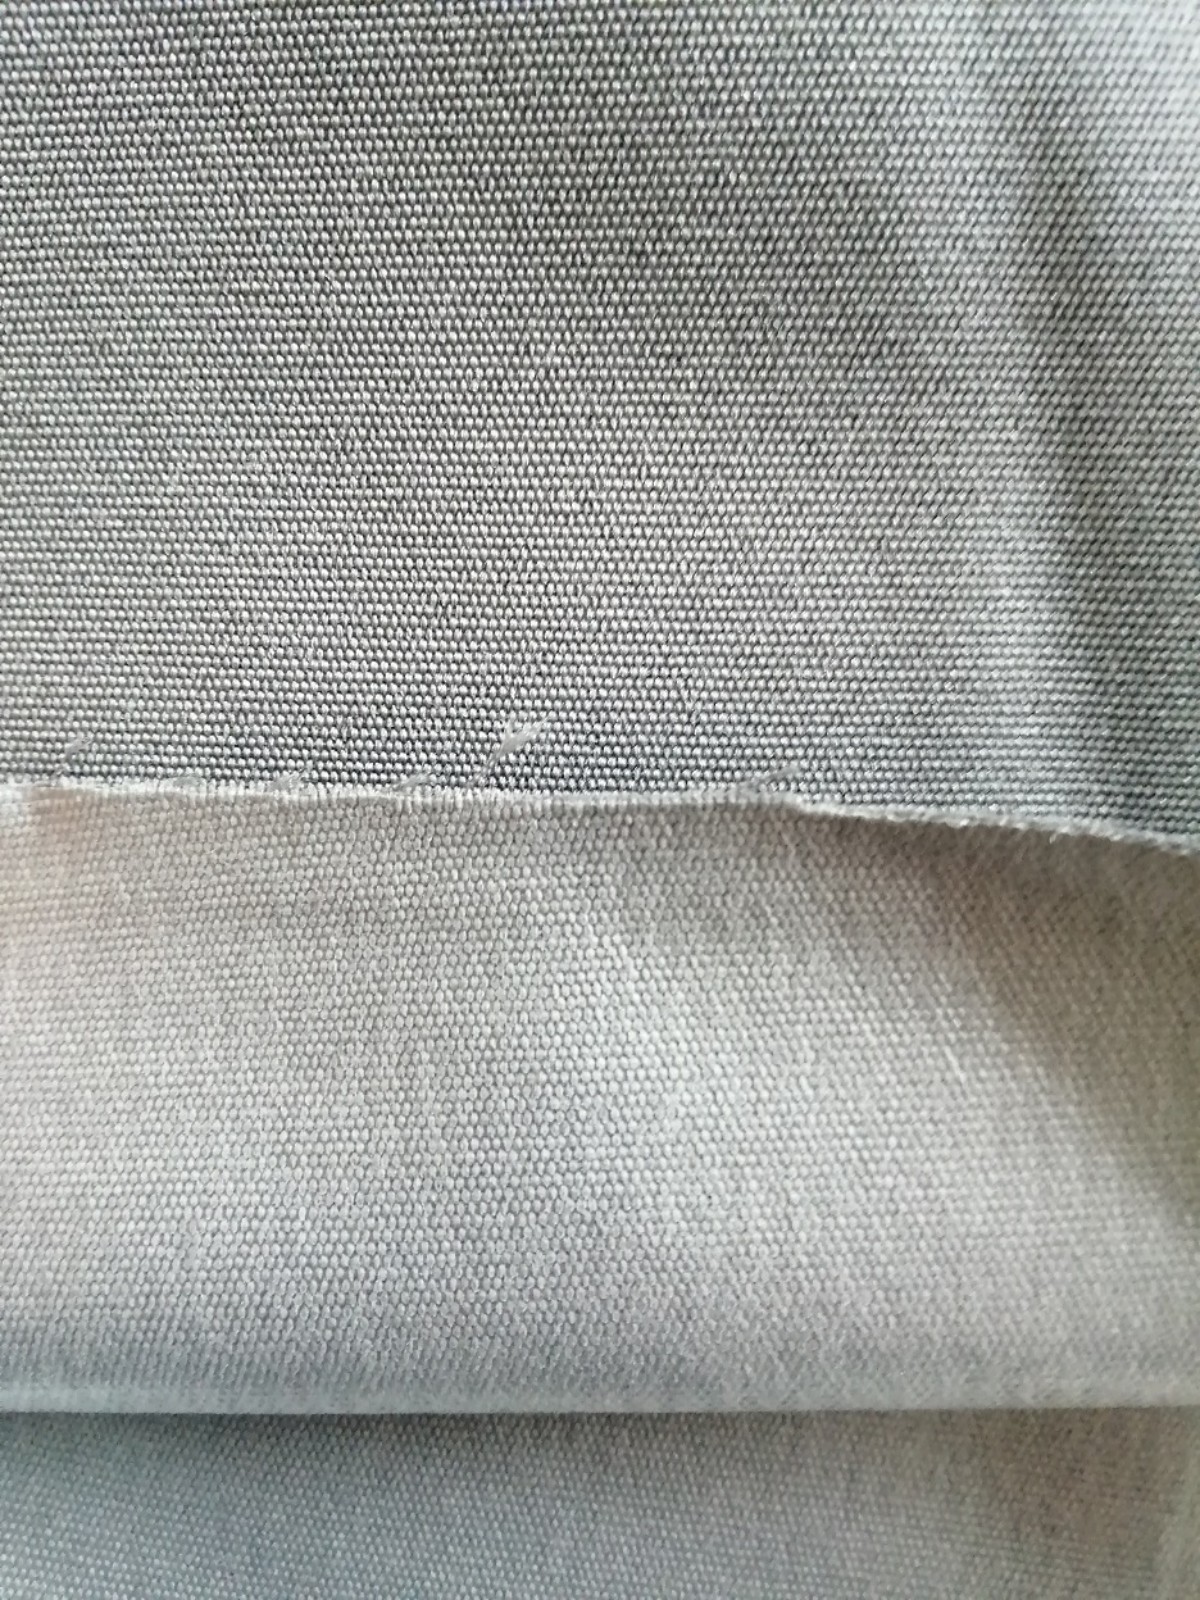 FB3112 Olefin fabric